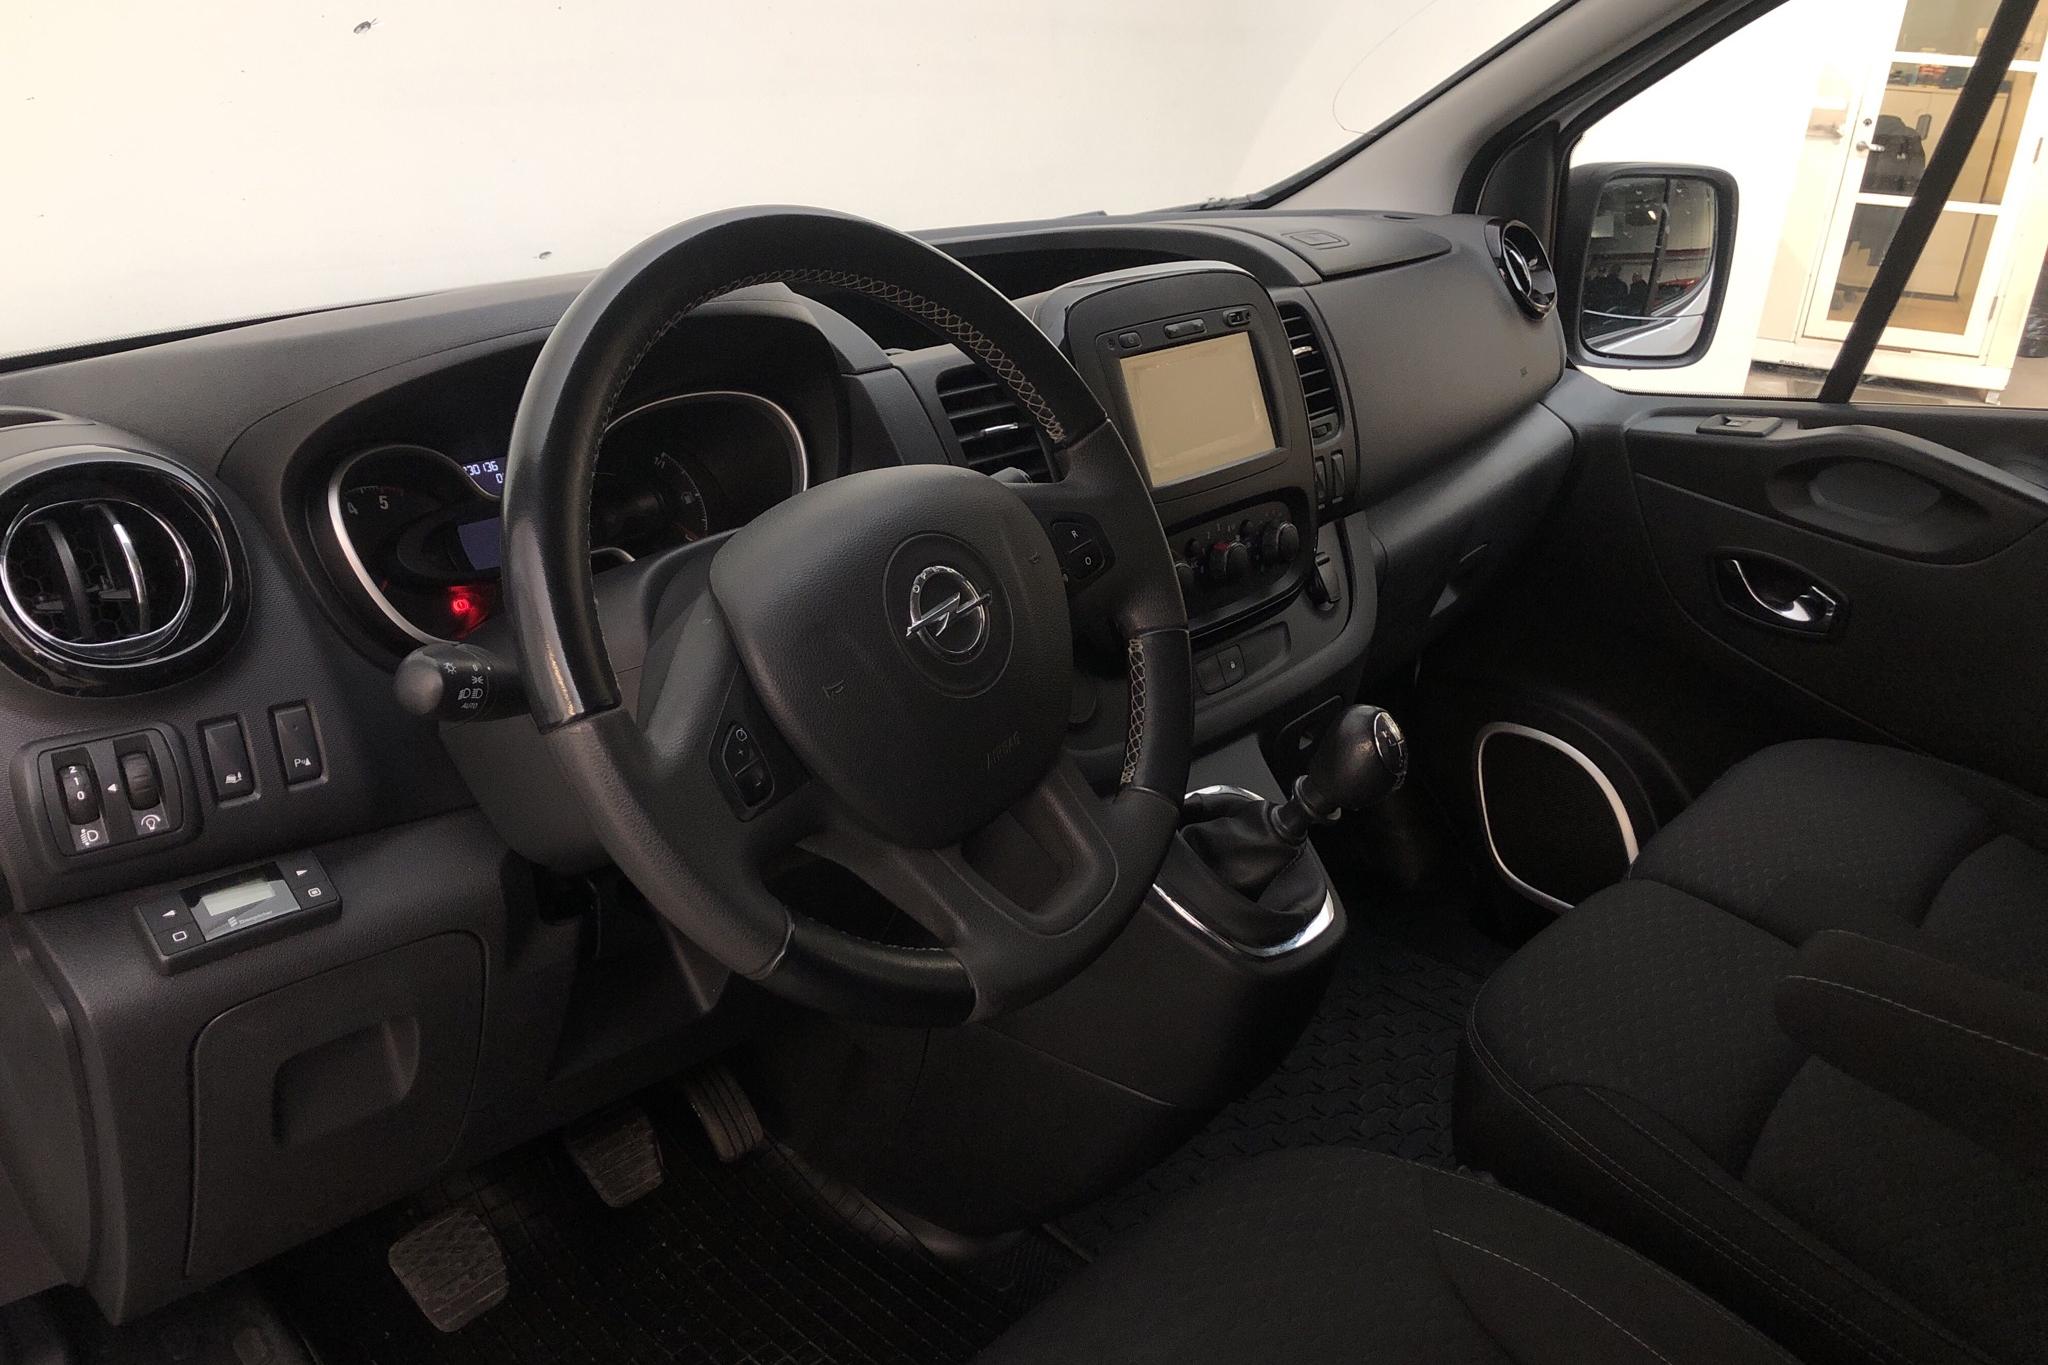 Opel Vivaro 1.6 BITURBO (125hk) - 23 013 mil - Manuell - vit - 2018